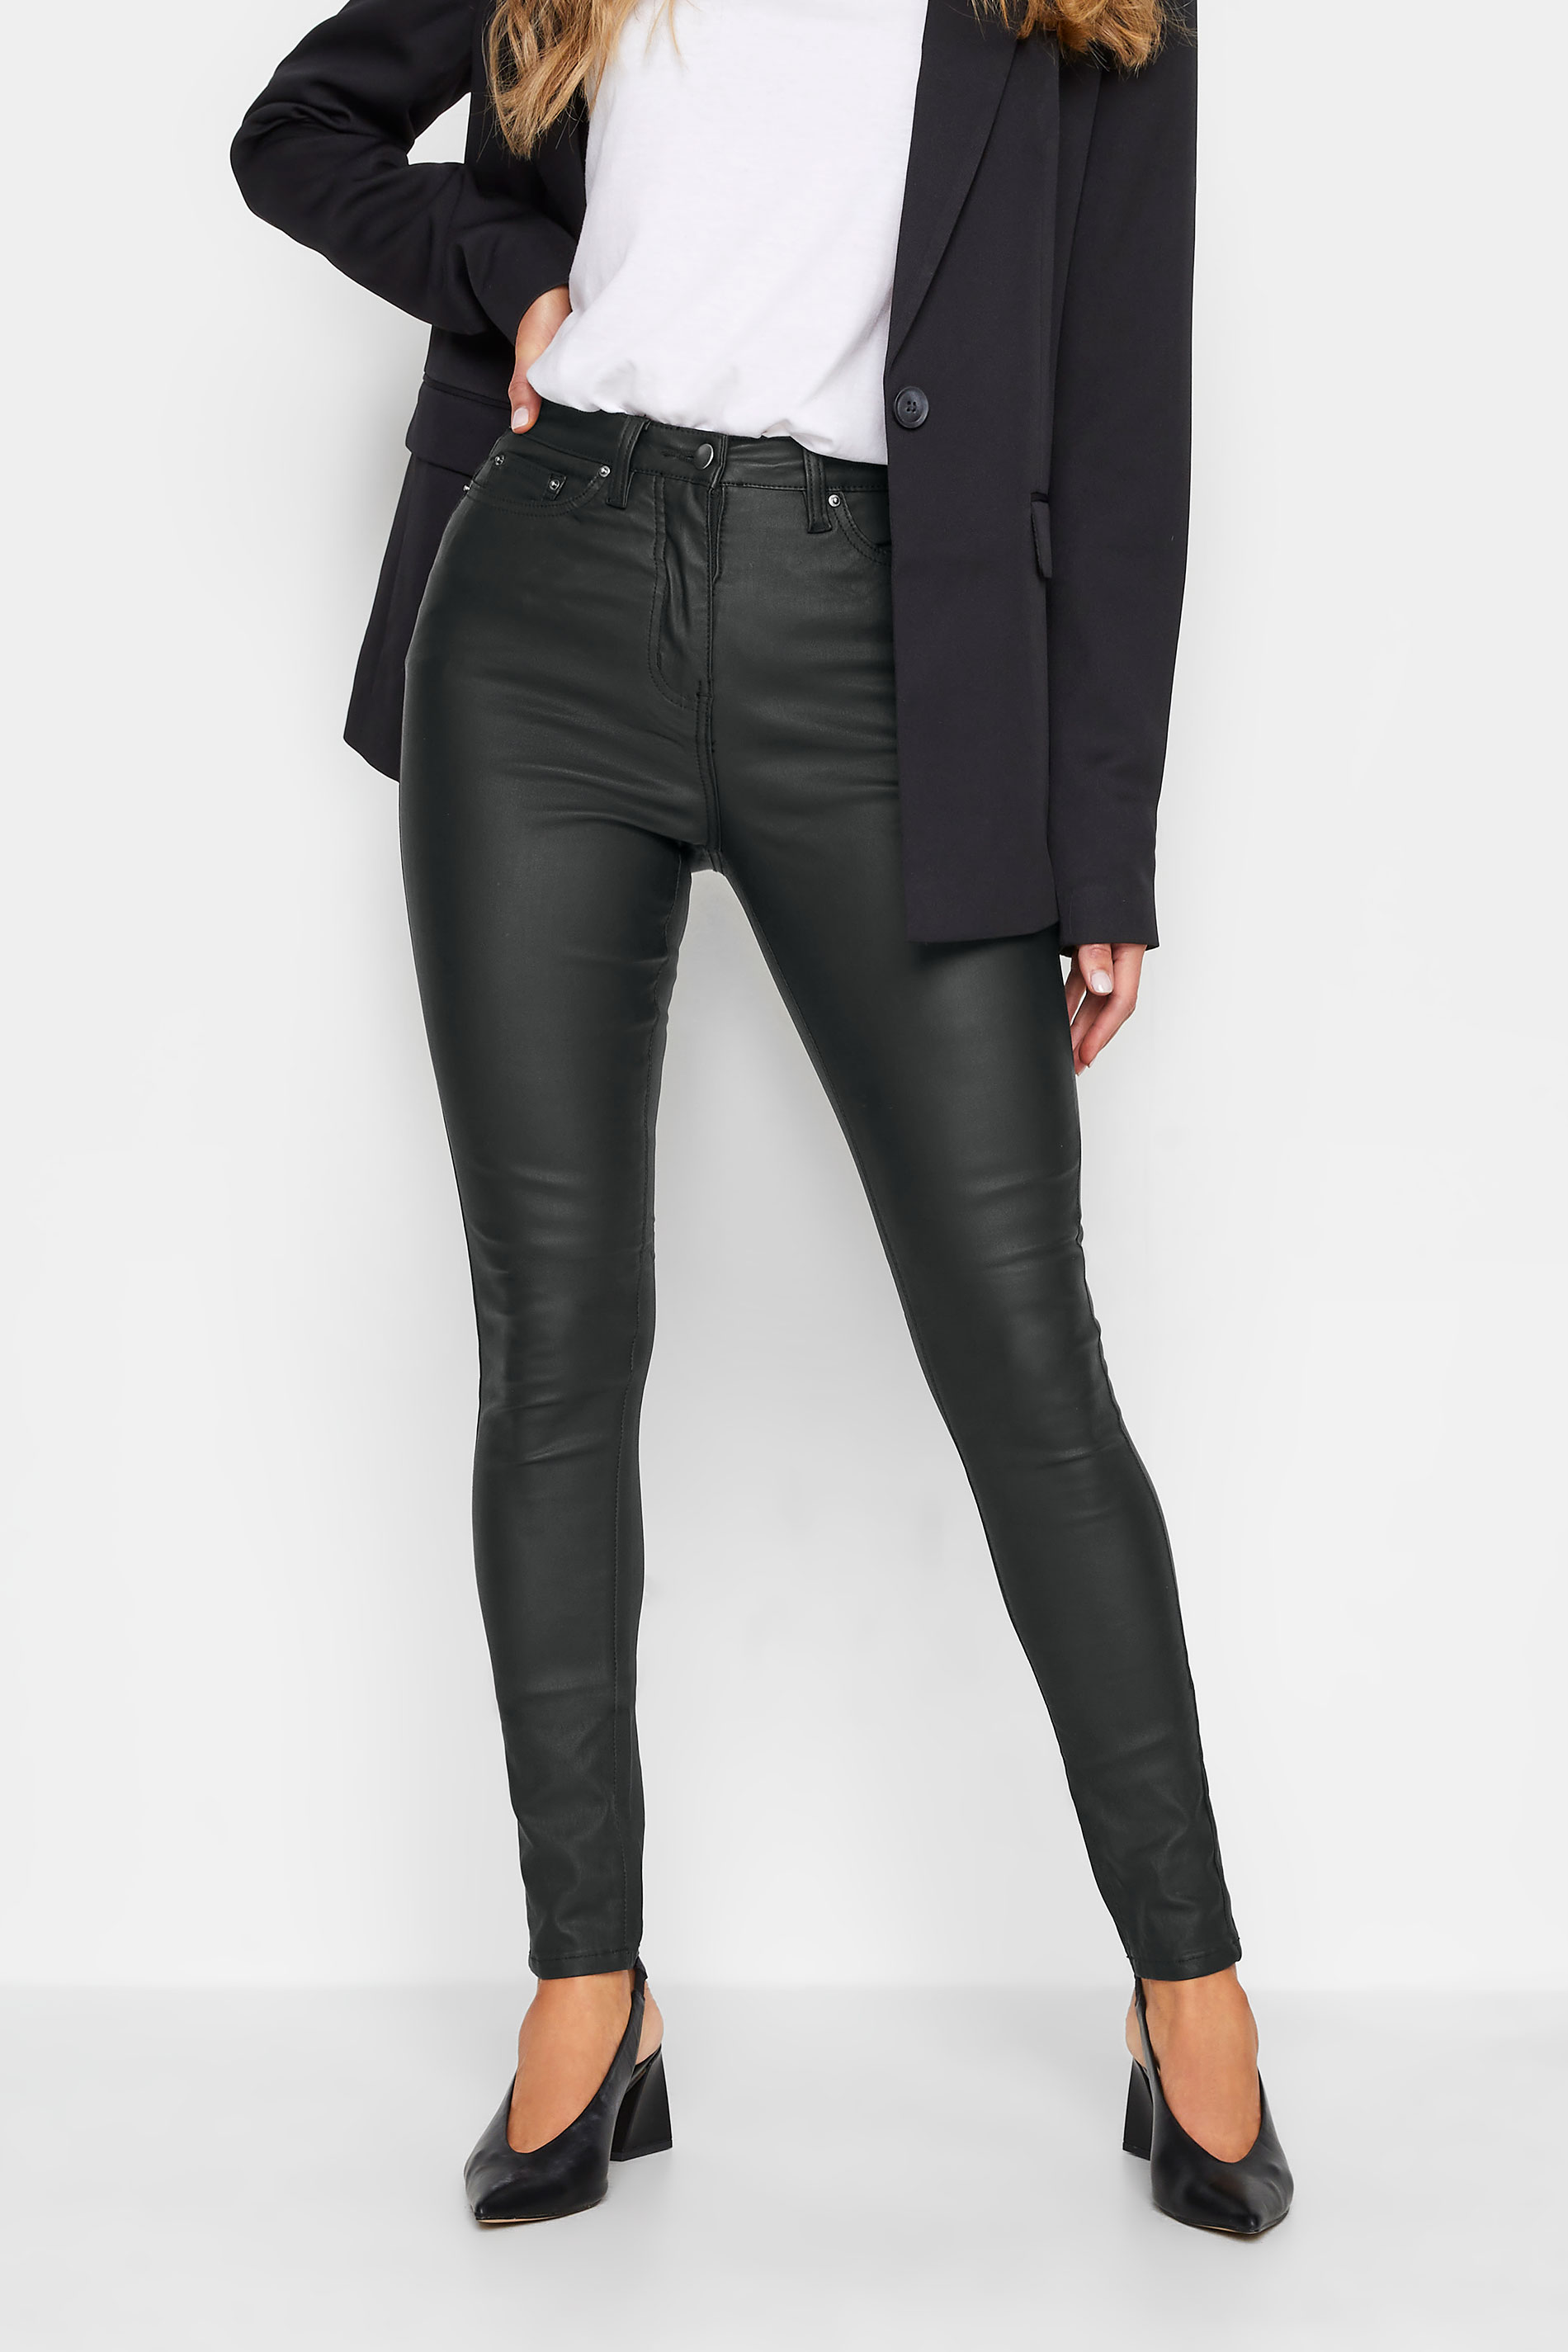 LTS Tall Black AVA Coated Jeans | Long Tall Sally 1